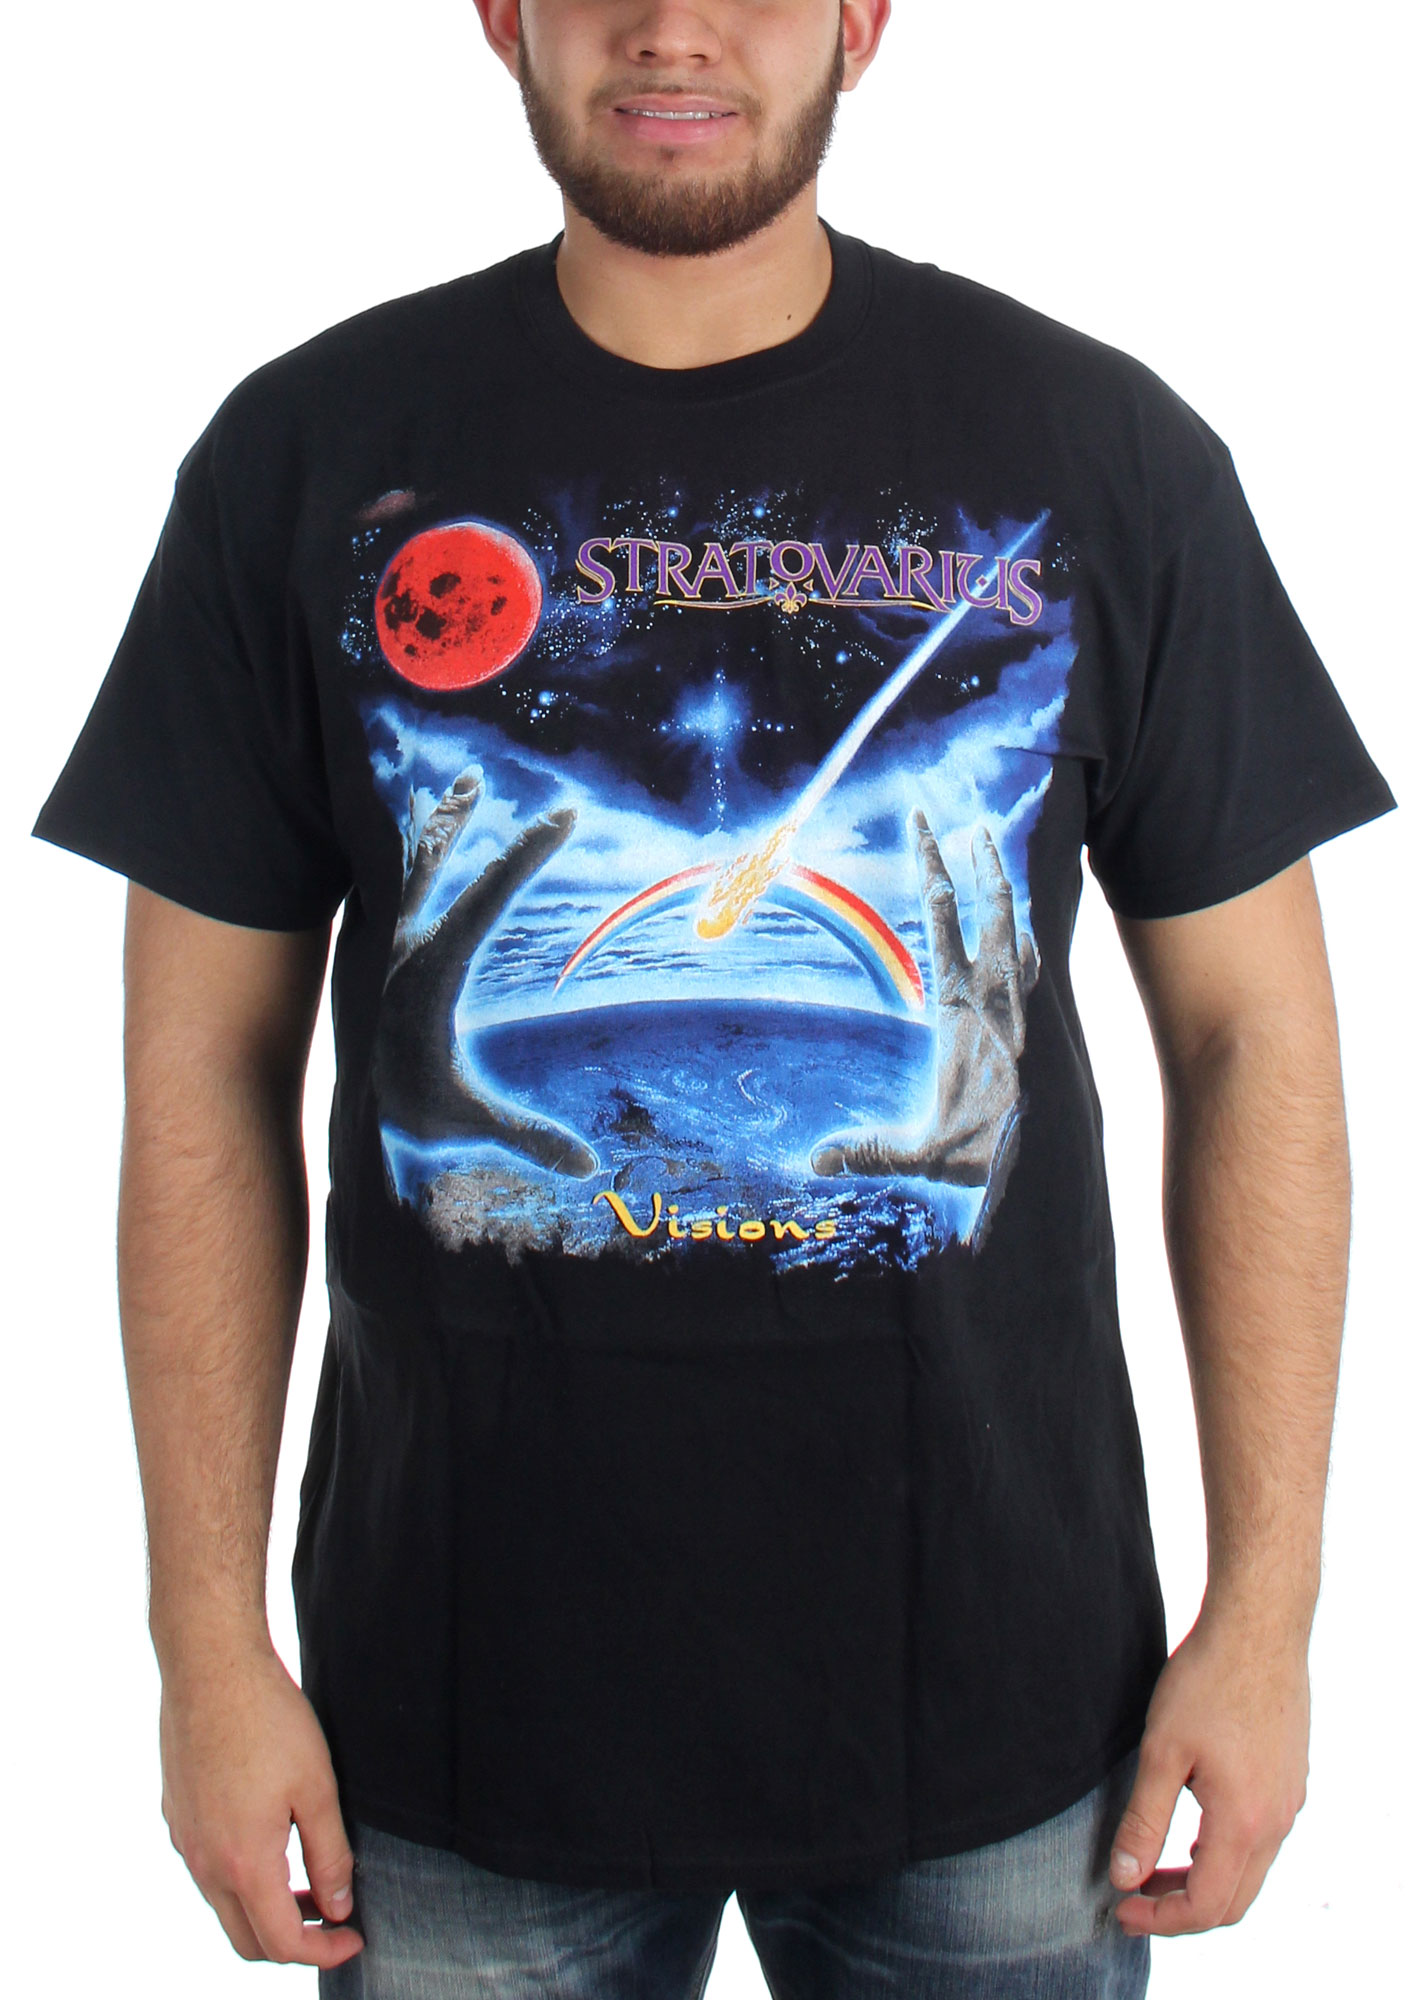 Stratovarius Logo Mens Stylish Double Full Printed Tee